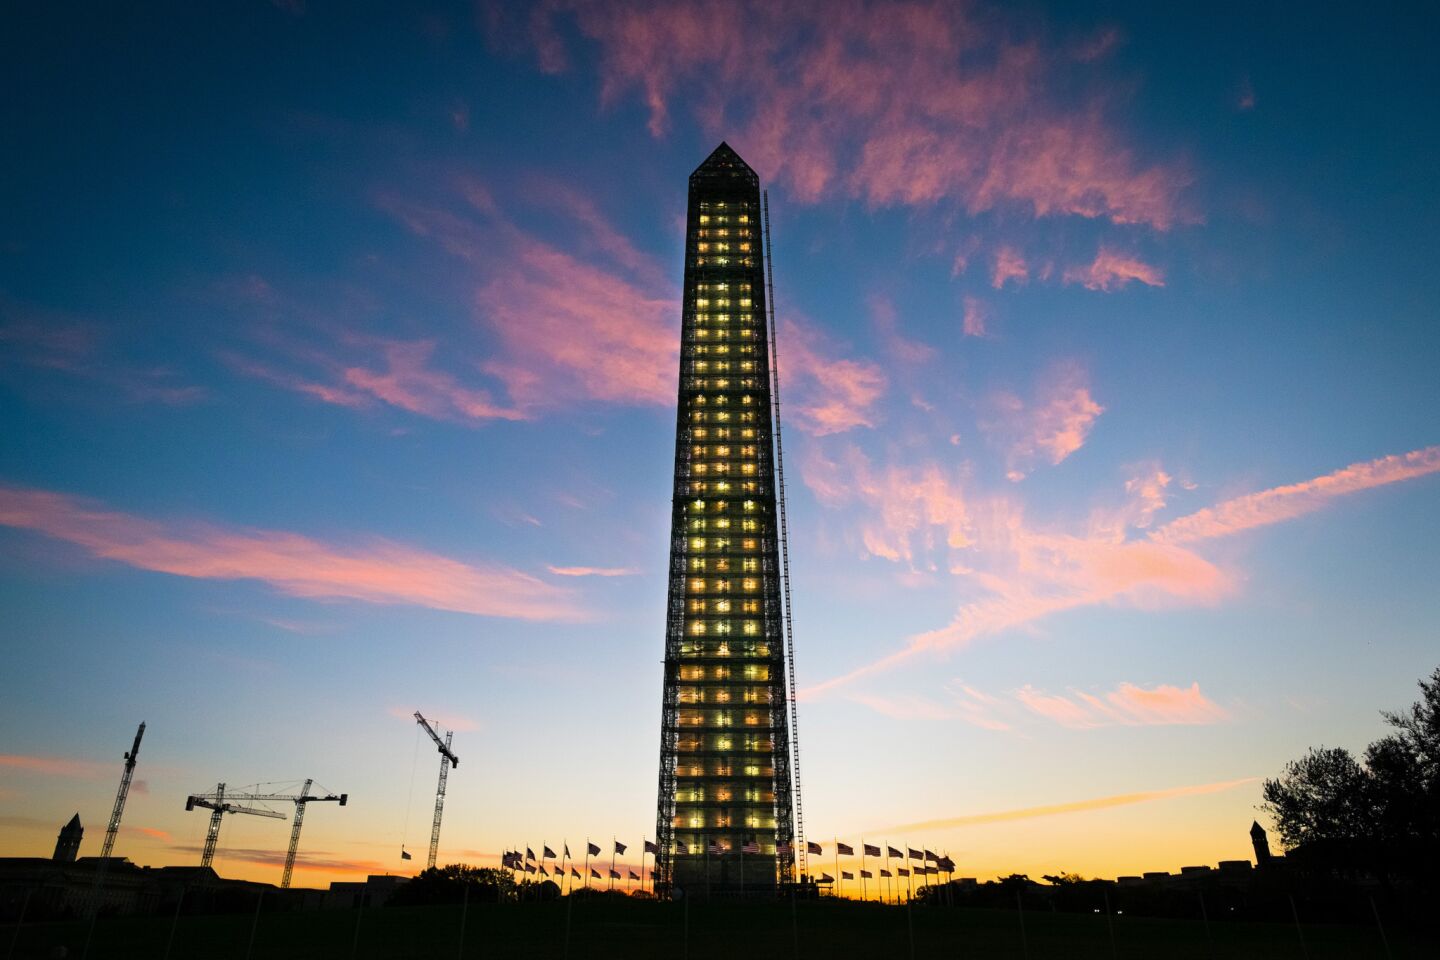 The sun rises behind the scaffolding-clad Washington Monument in Washington.